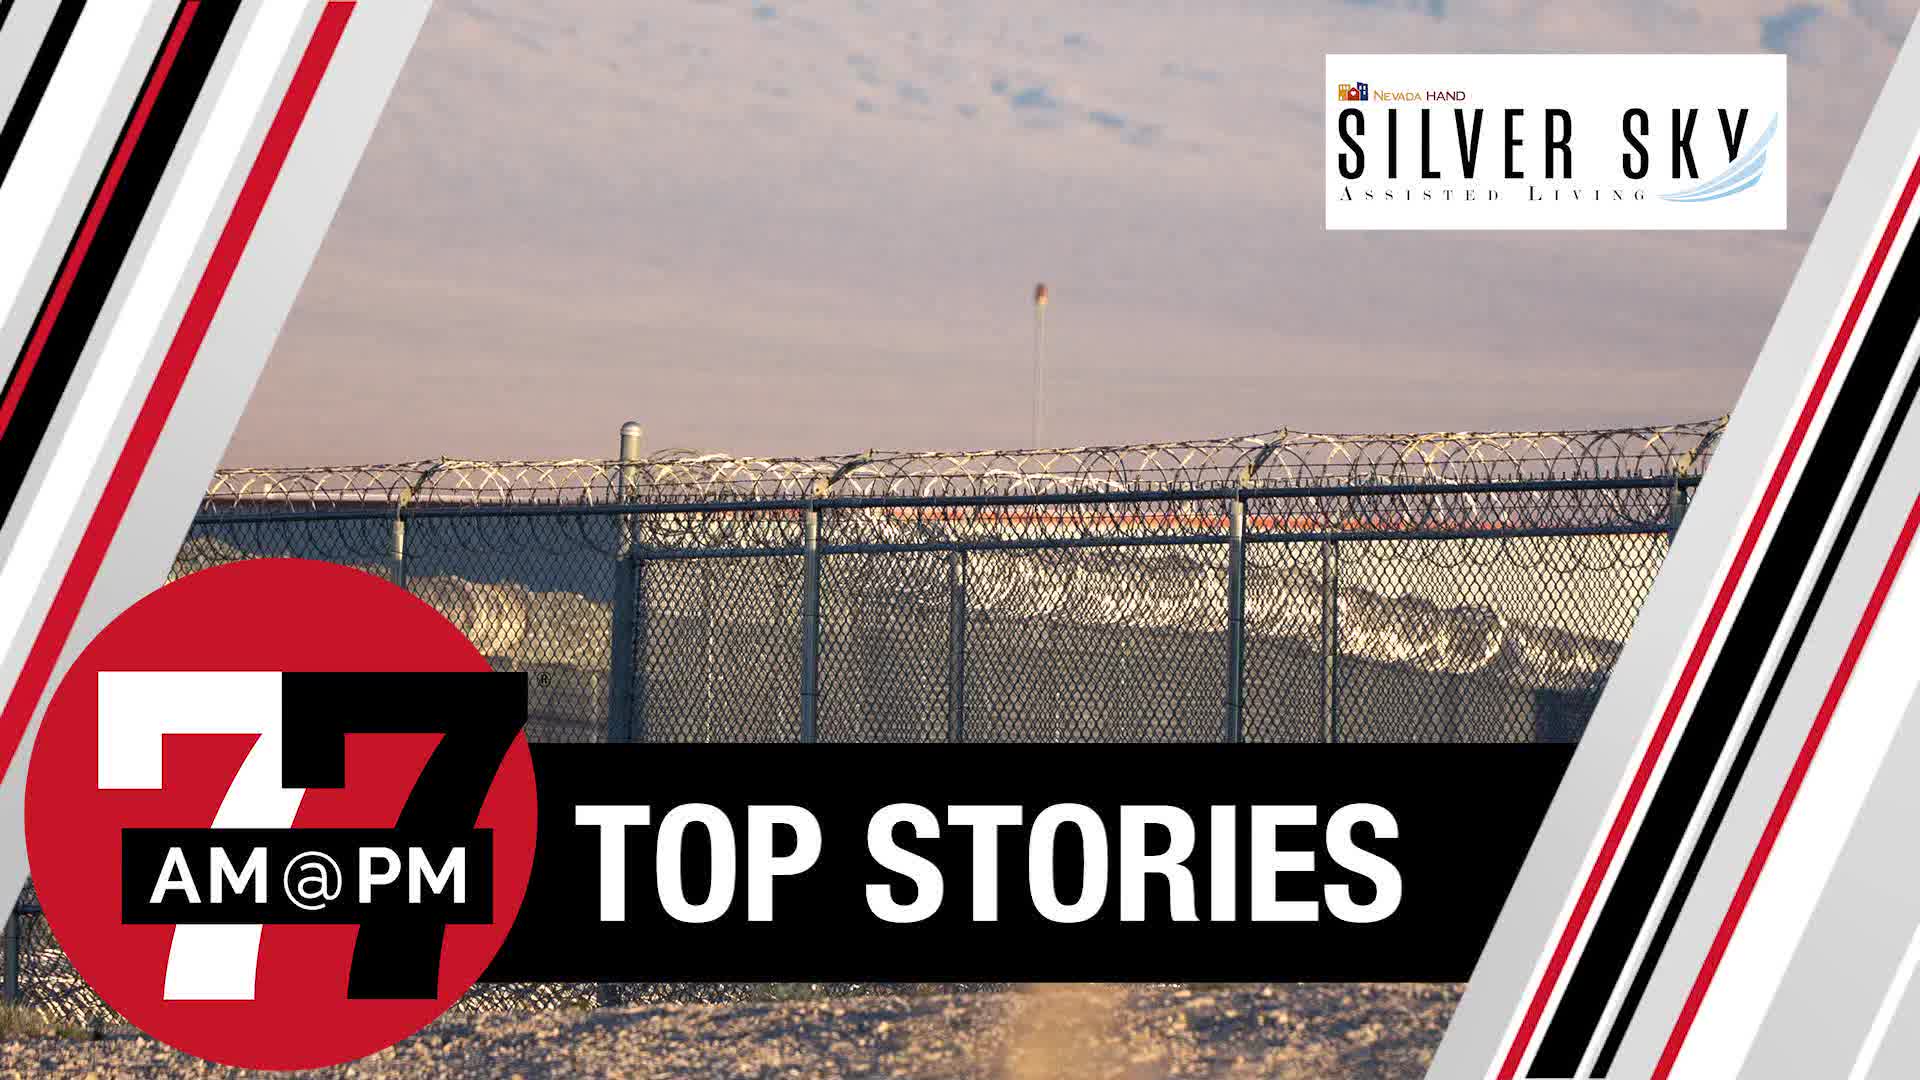 Convicted Luxor bomber escapes detention center